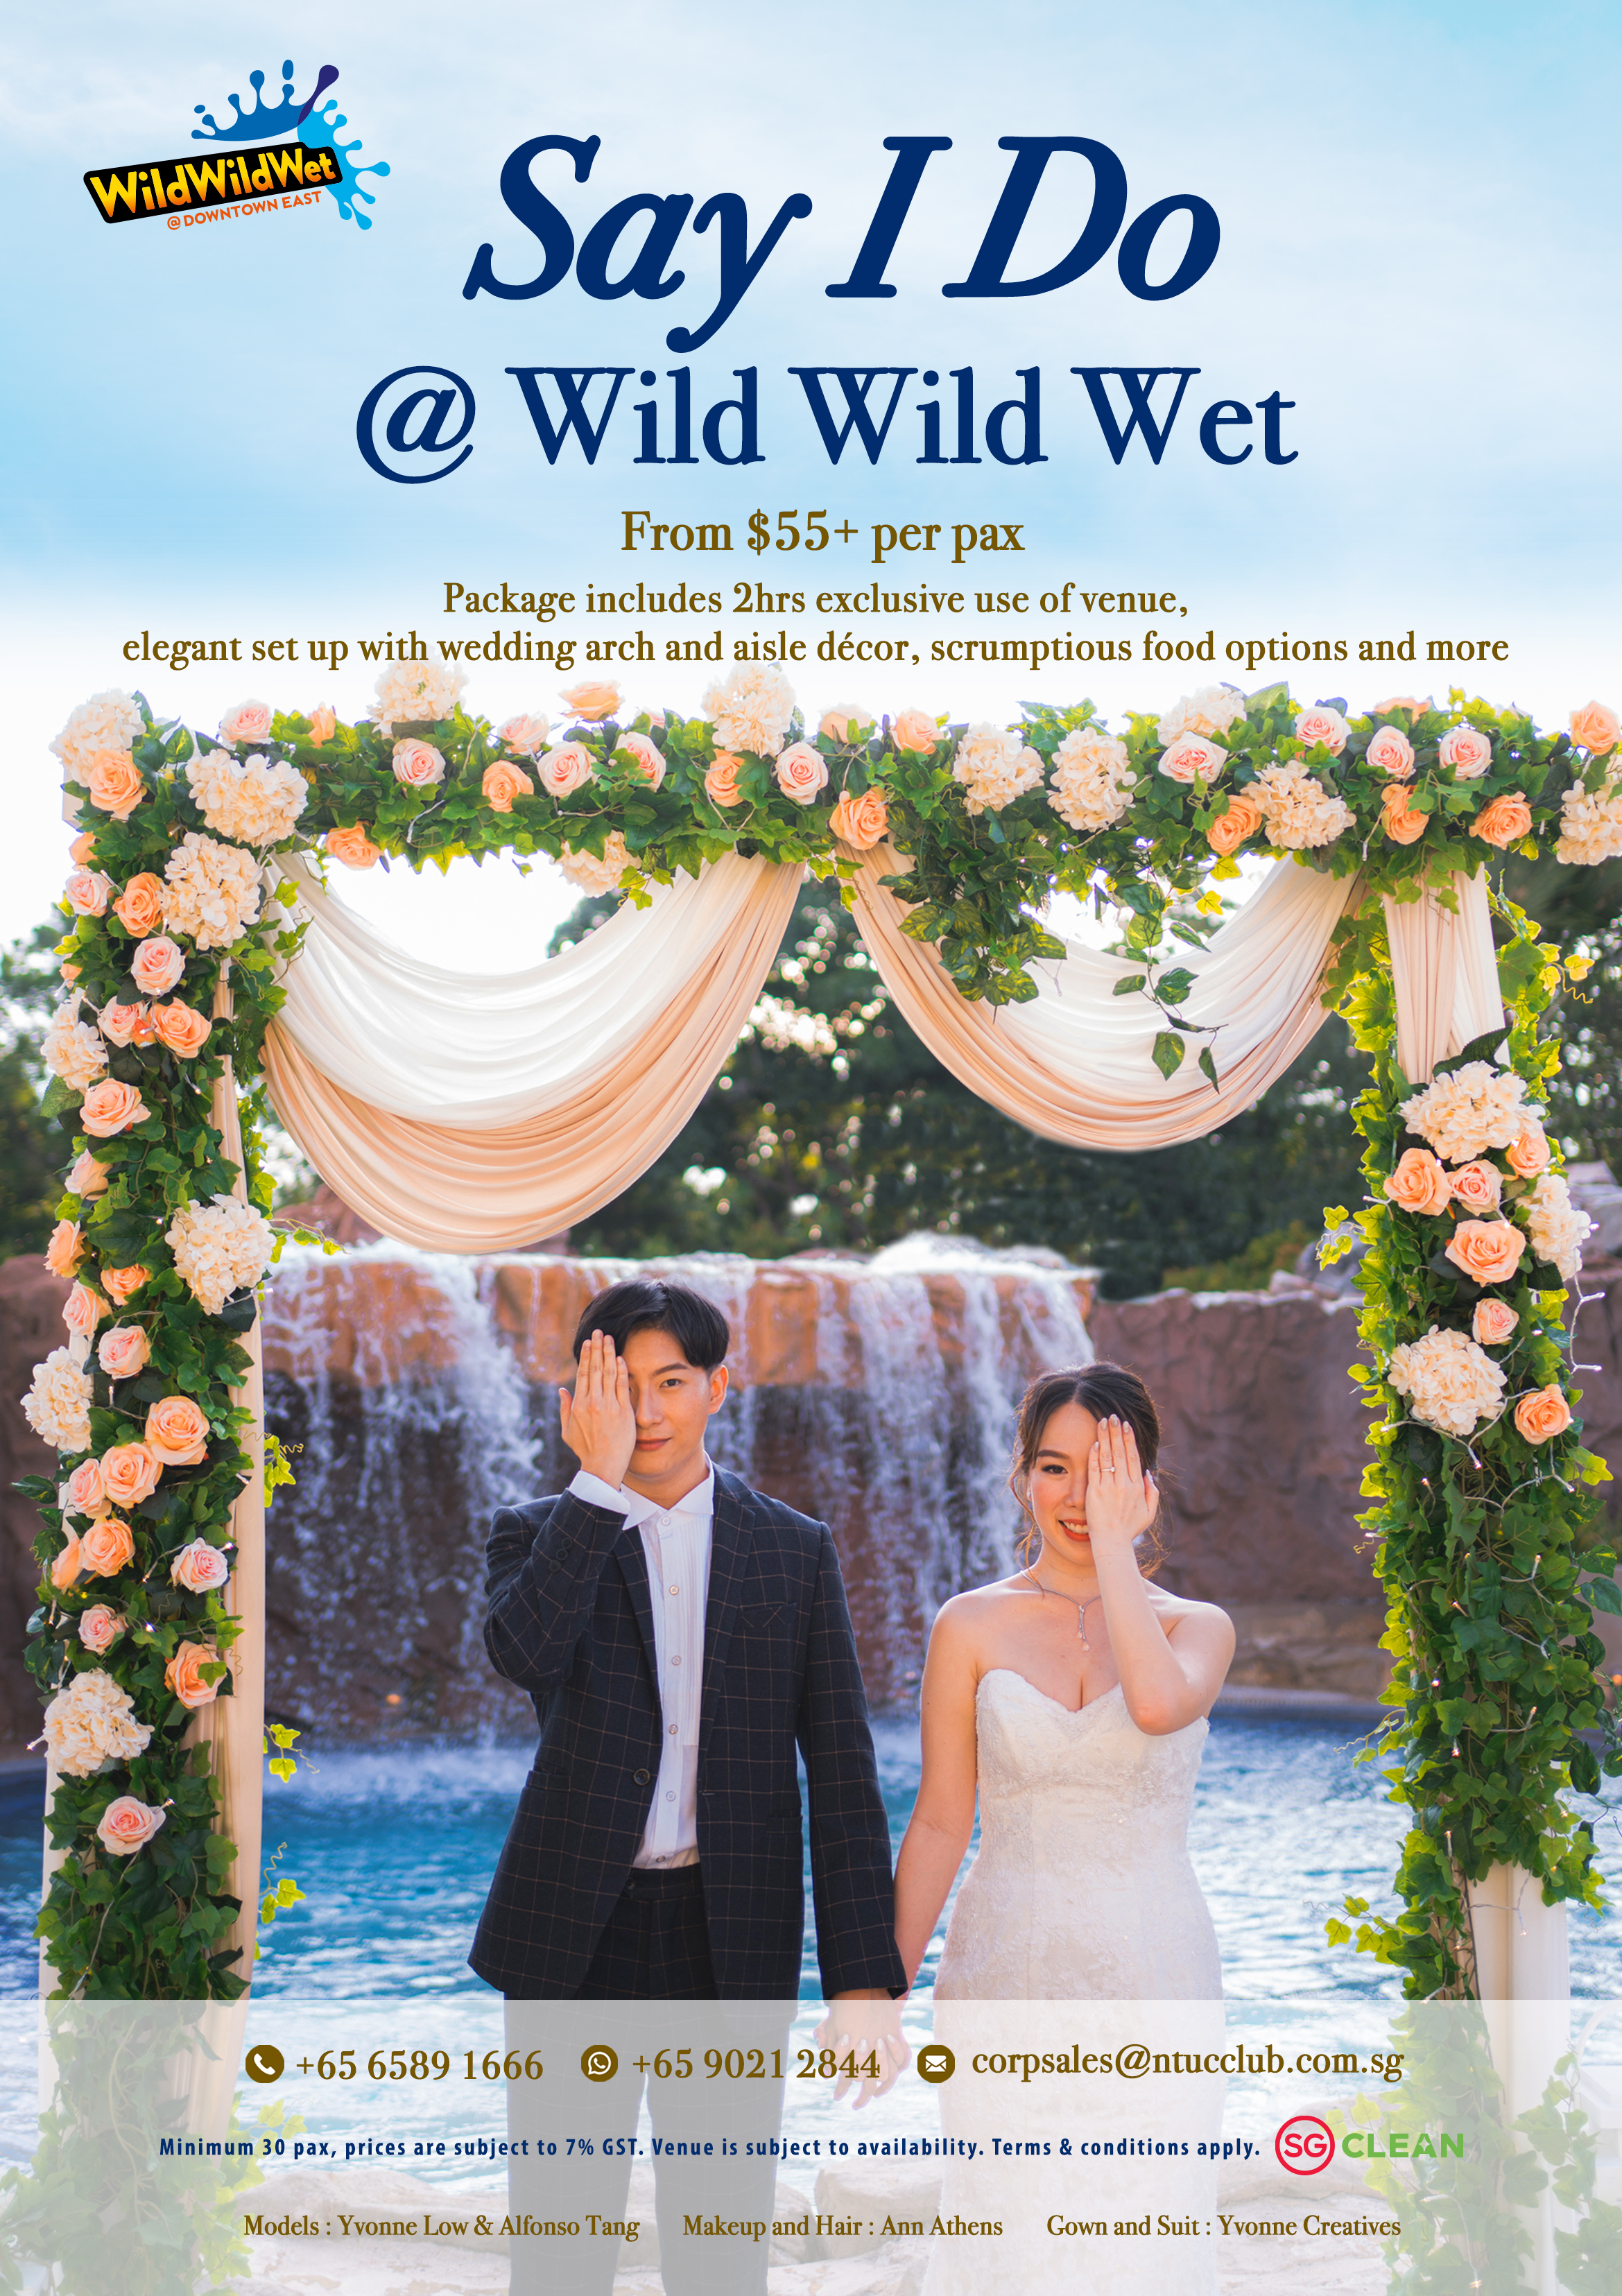 Outdoor wedding venues at Wild Wild Wet water park Singapore